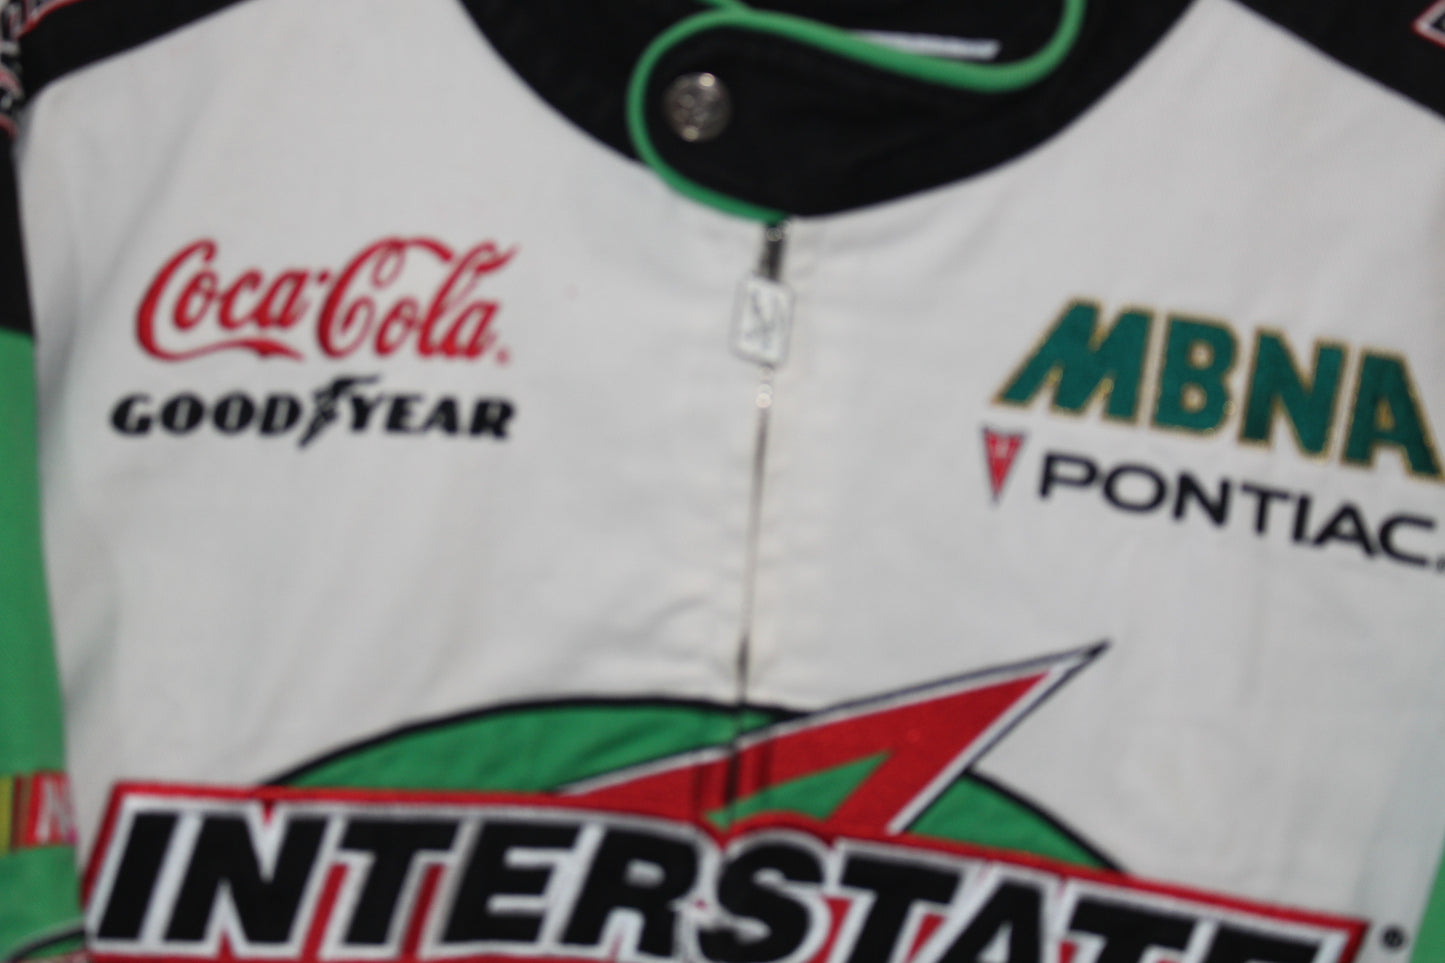 Rare Interstate Batteries Racing NASCAR Bobby Labonte #18 (L)